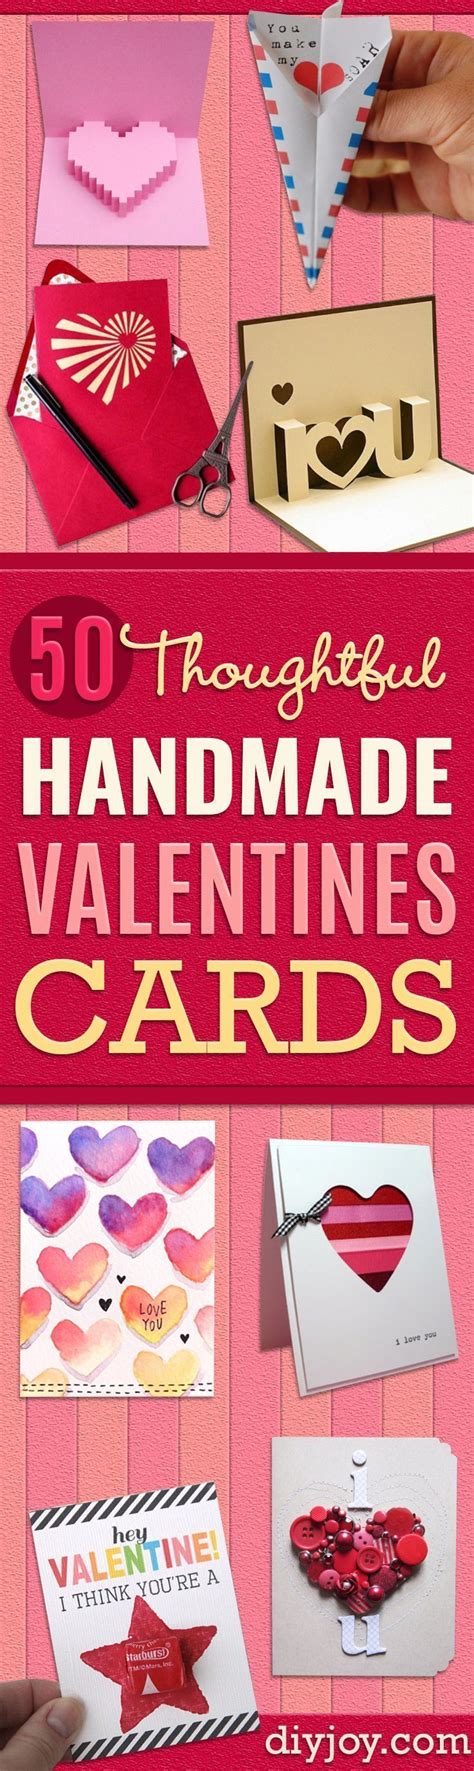 50 Thoughtful Handmade Valentines Cards Valentine Cards Handmade